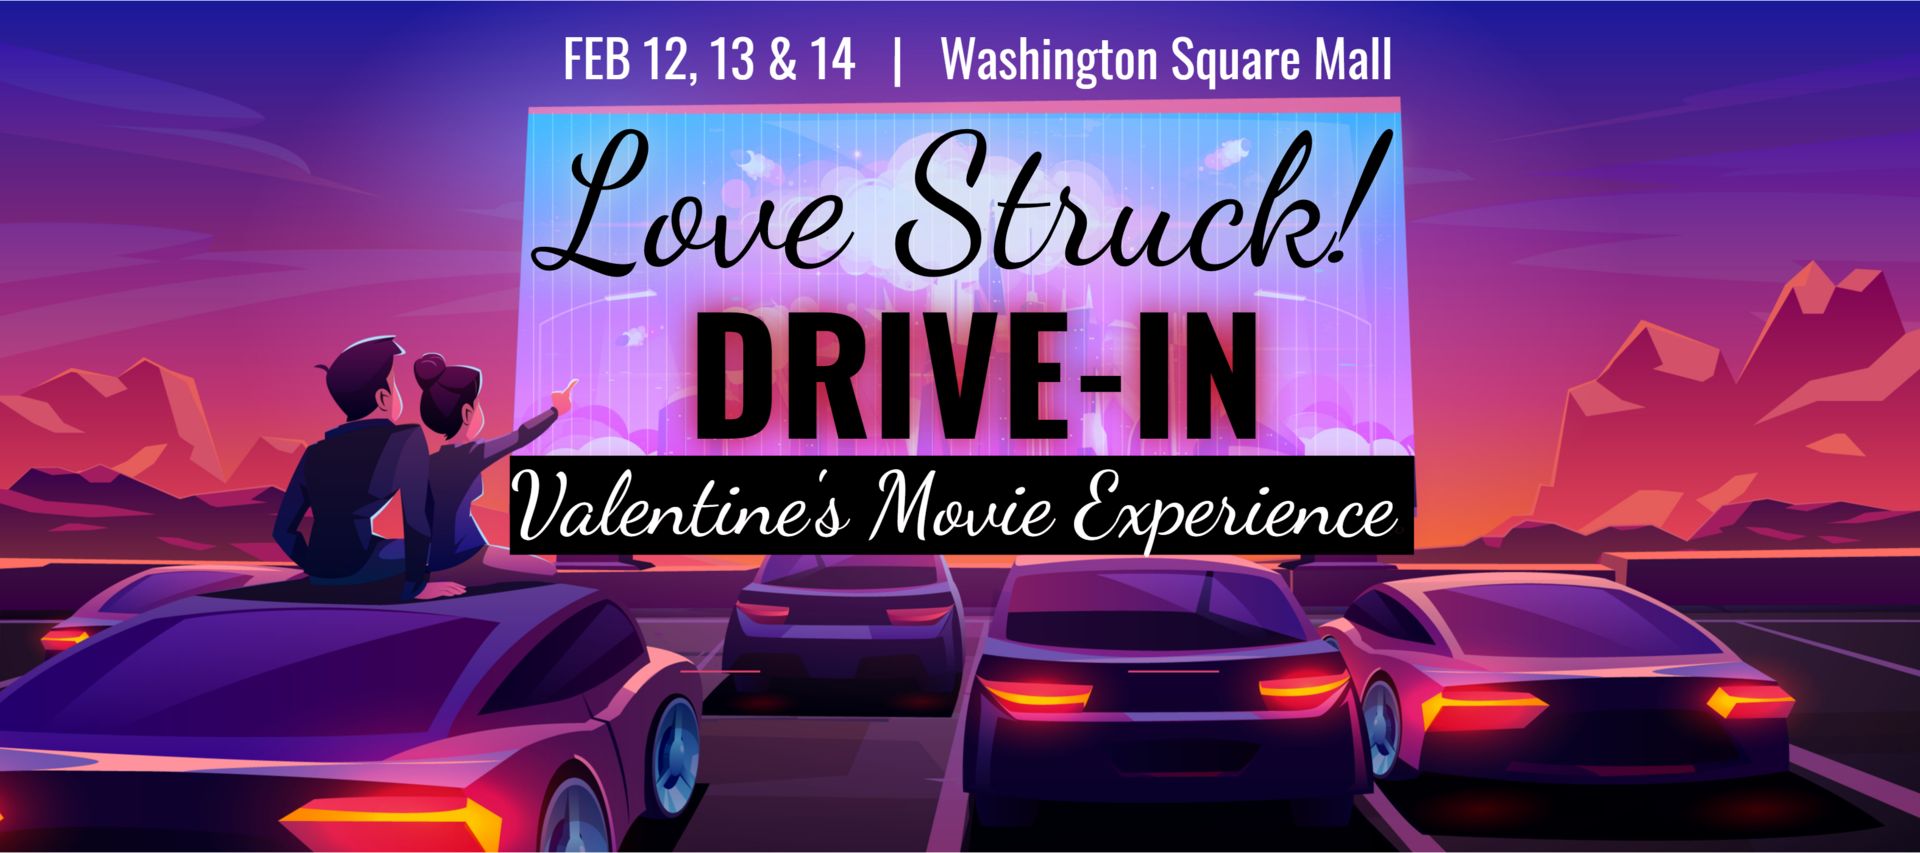 Love Struck Drive-In, Portland, Oregon, United States